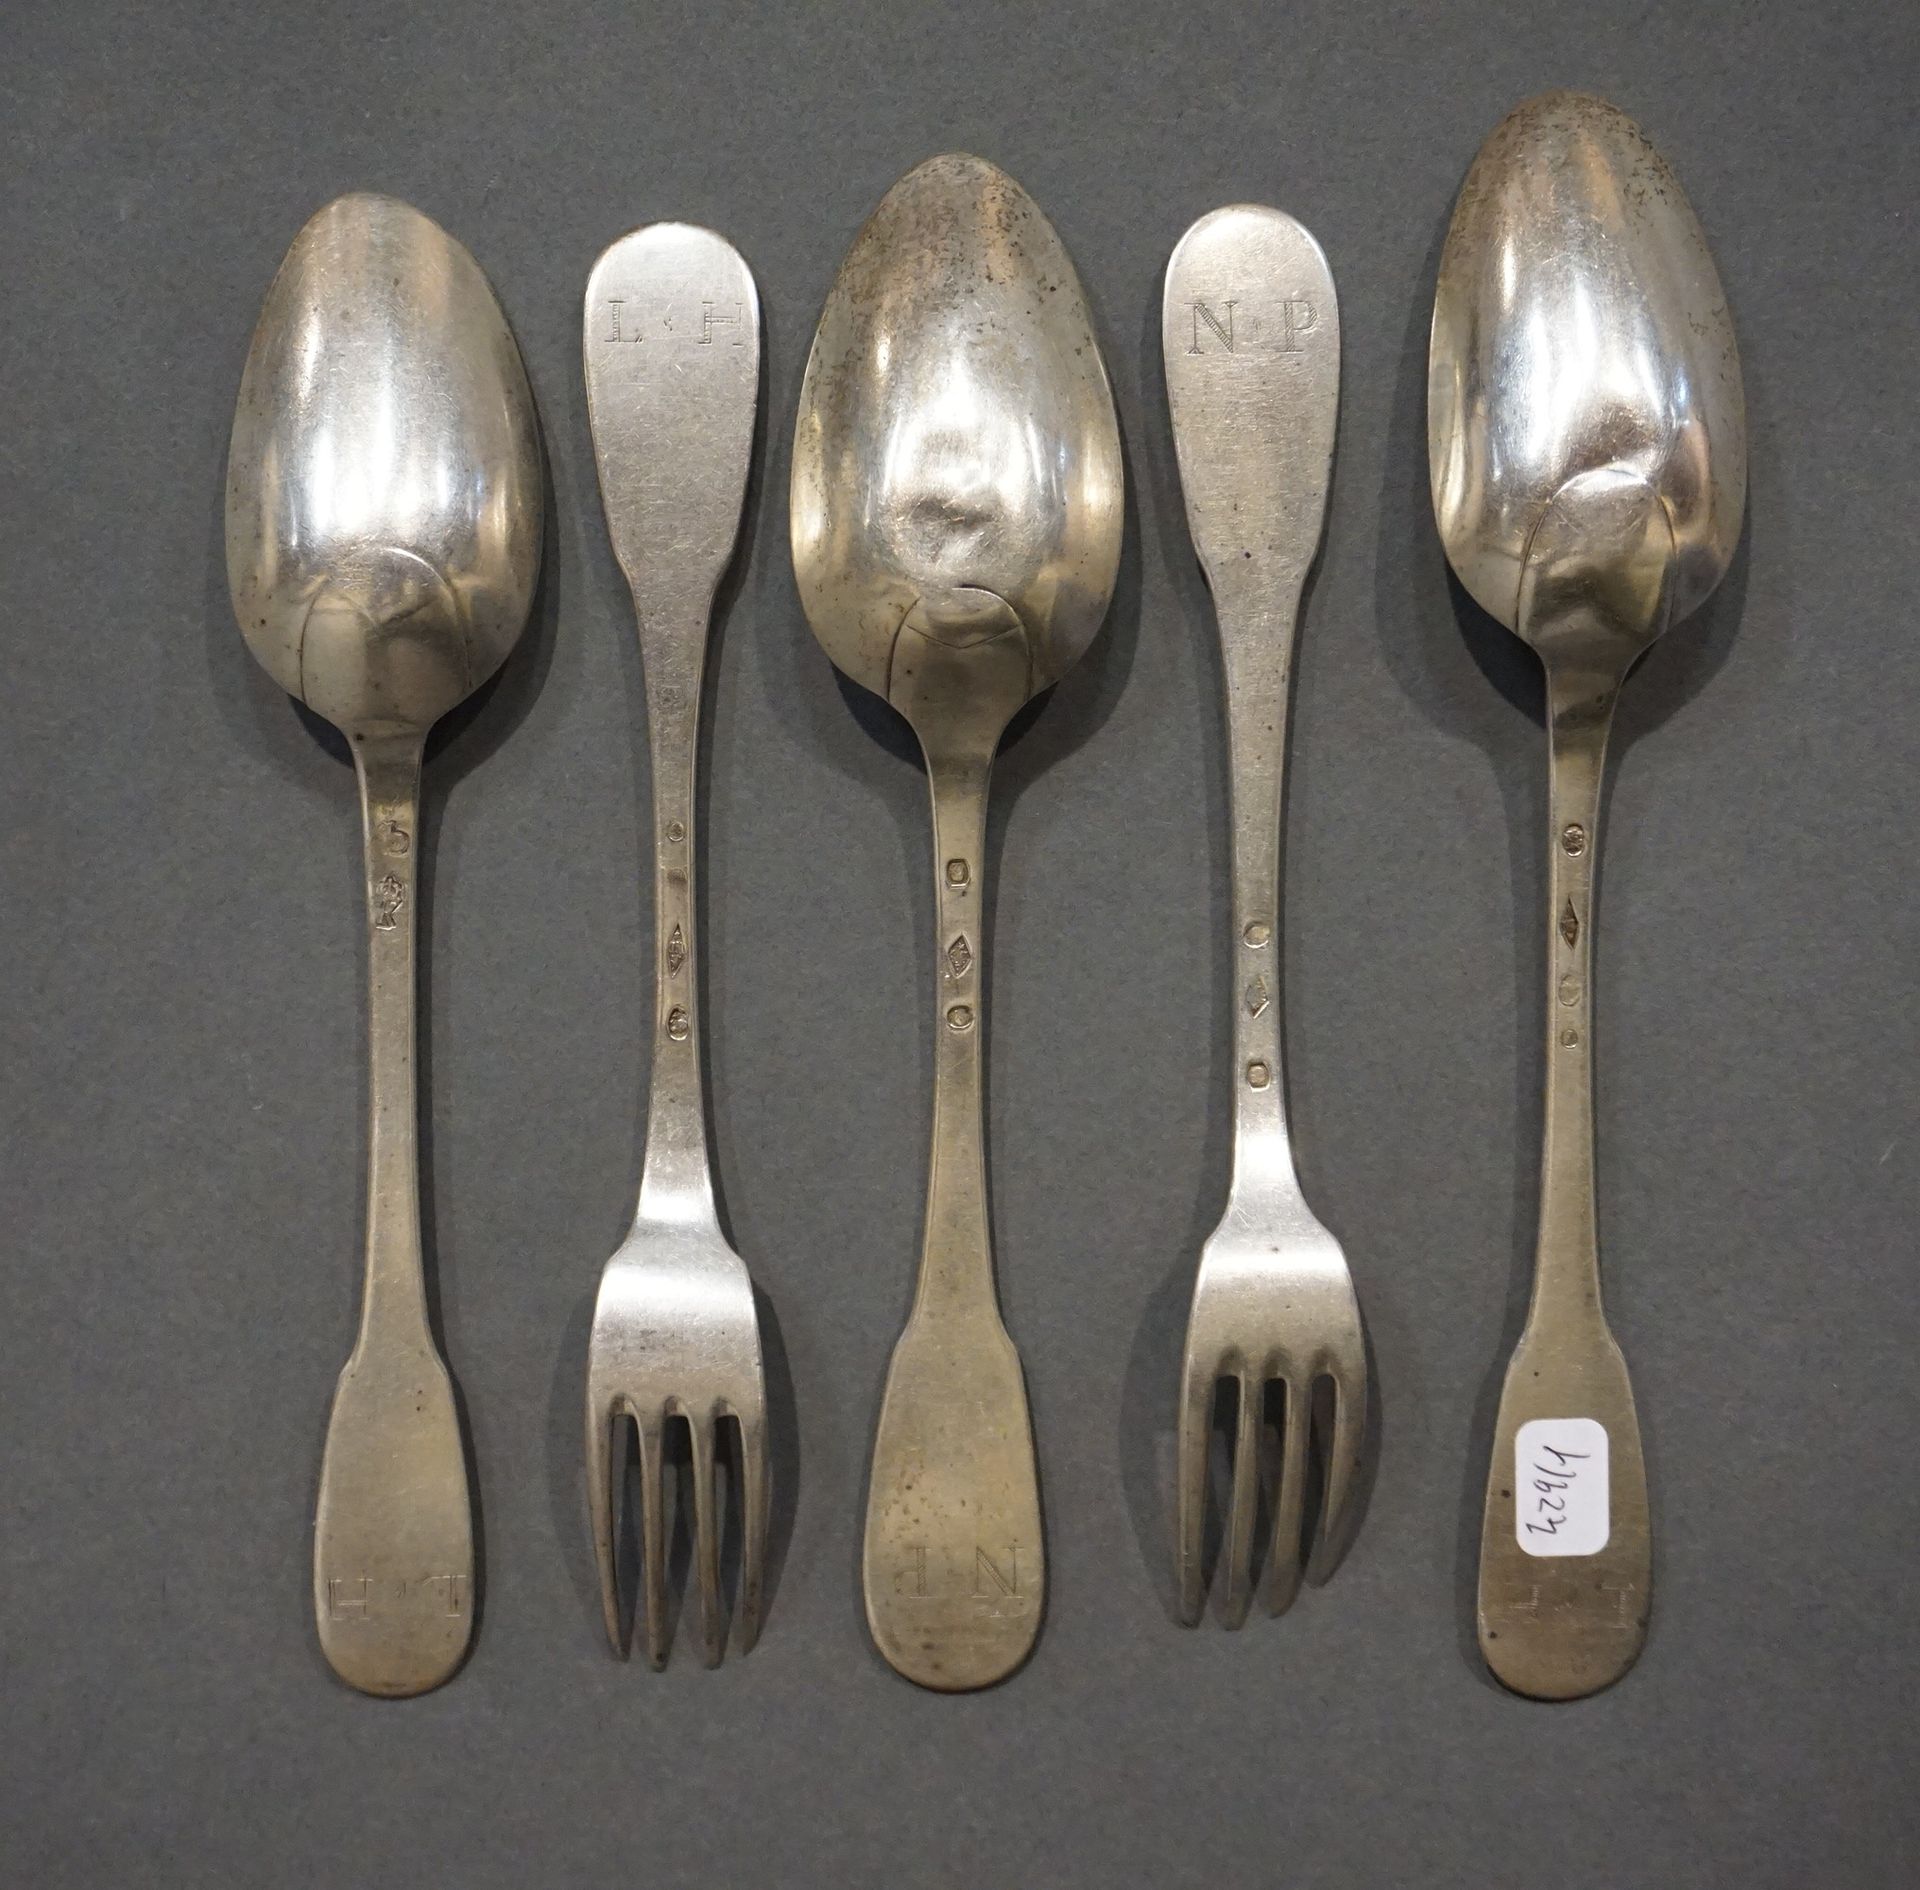 COUVERTS 三把勺子和两把叉子是纯银的。Fermiers généraux，有一只公鸡和一个老人的头（磨损） 288grs